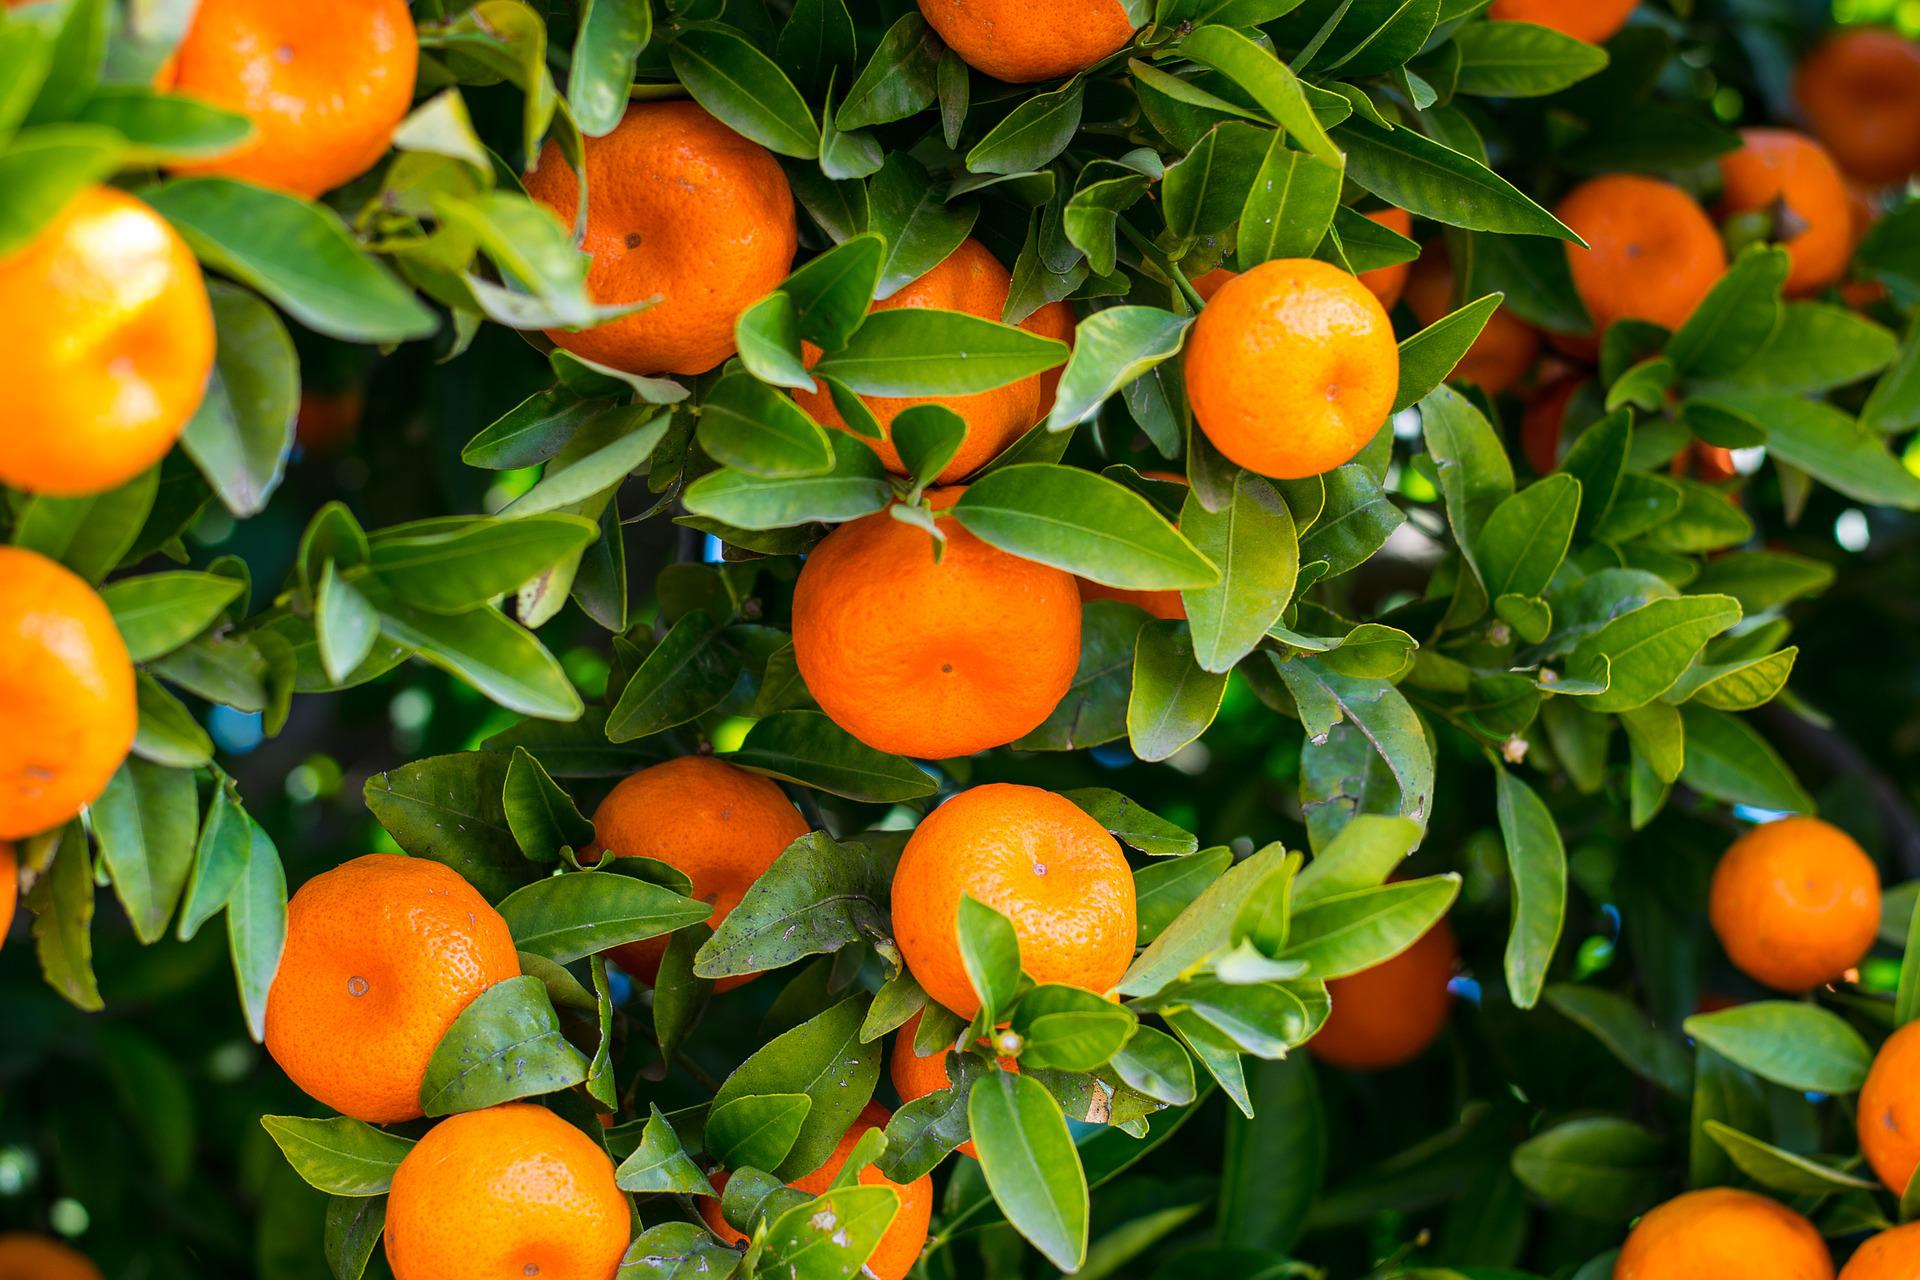 bacterias folha de laranja e citros elimina agrotóxicos